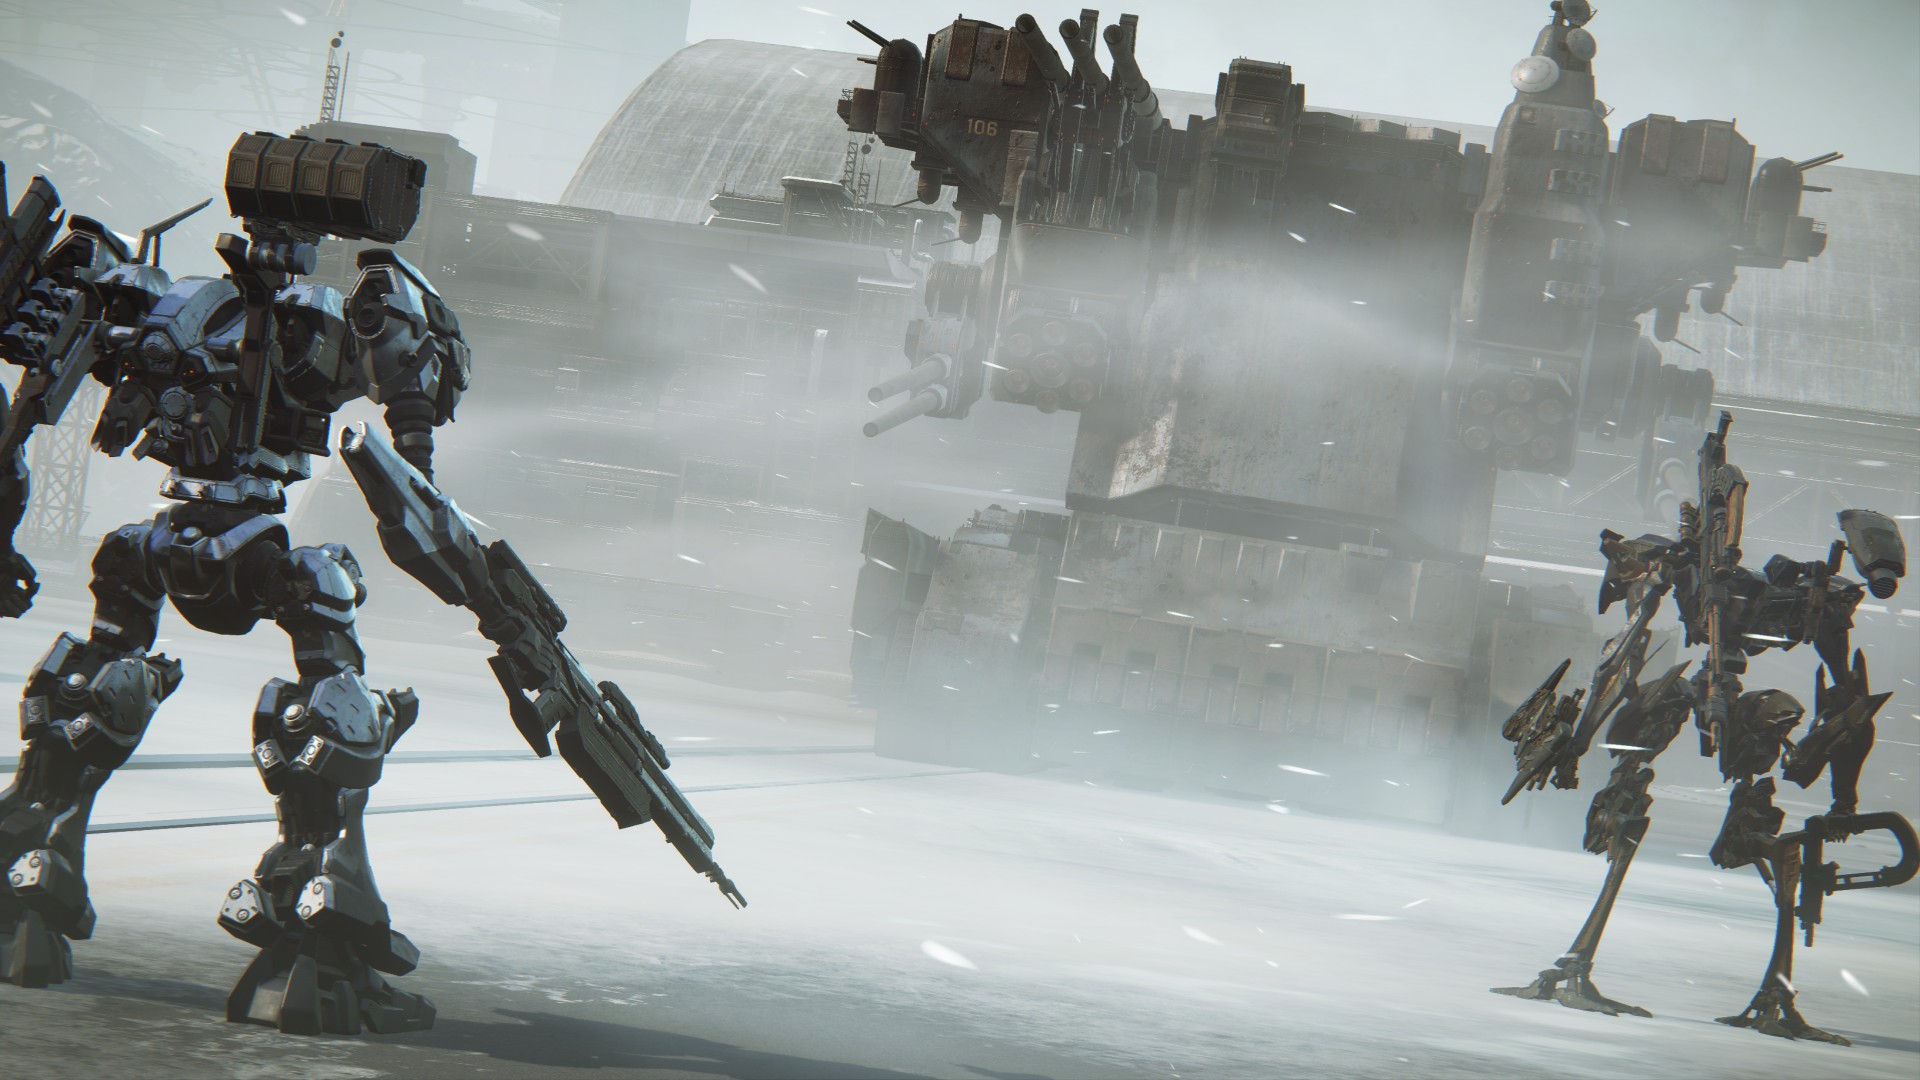 When Will Armored Core 6 Come to Xbox Game Pass? Prepare for a Devastating  Update - FandomWire